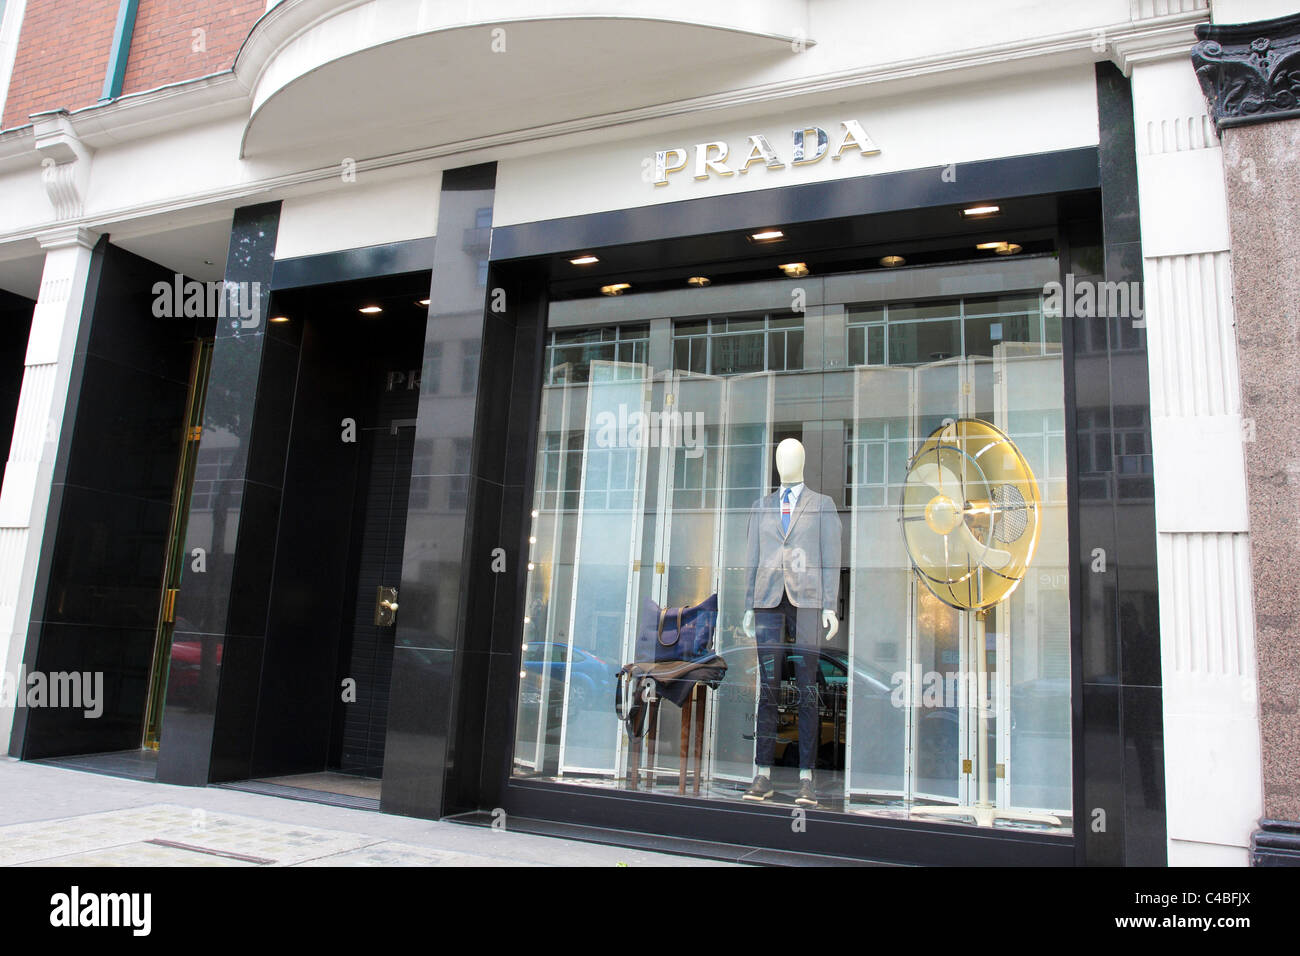 Prada high fashion outlet in Sloane Street, London Stock Photo - Alamy